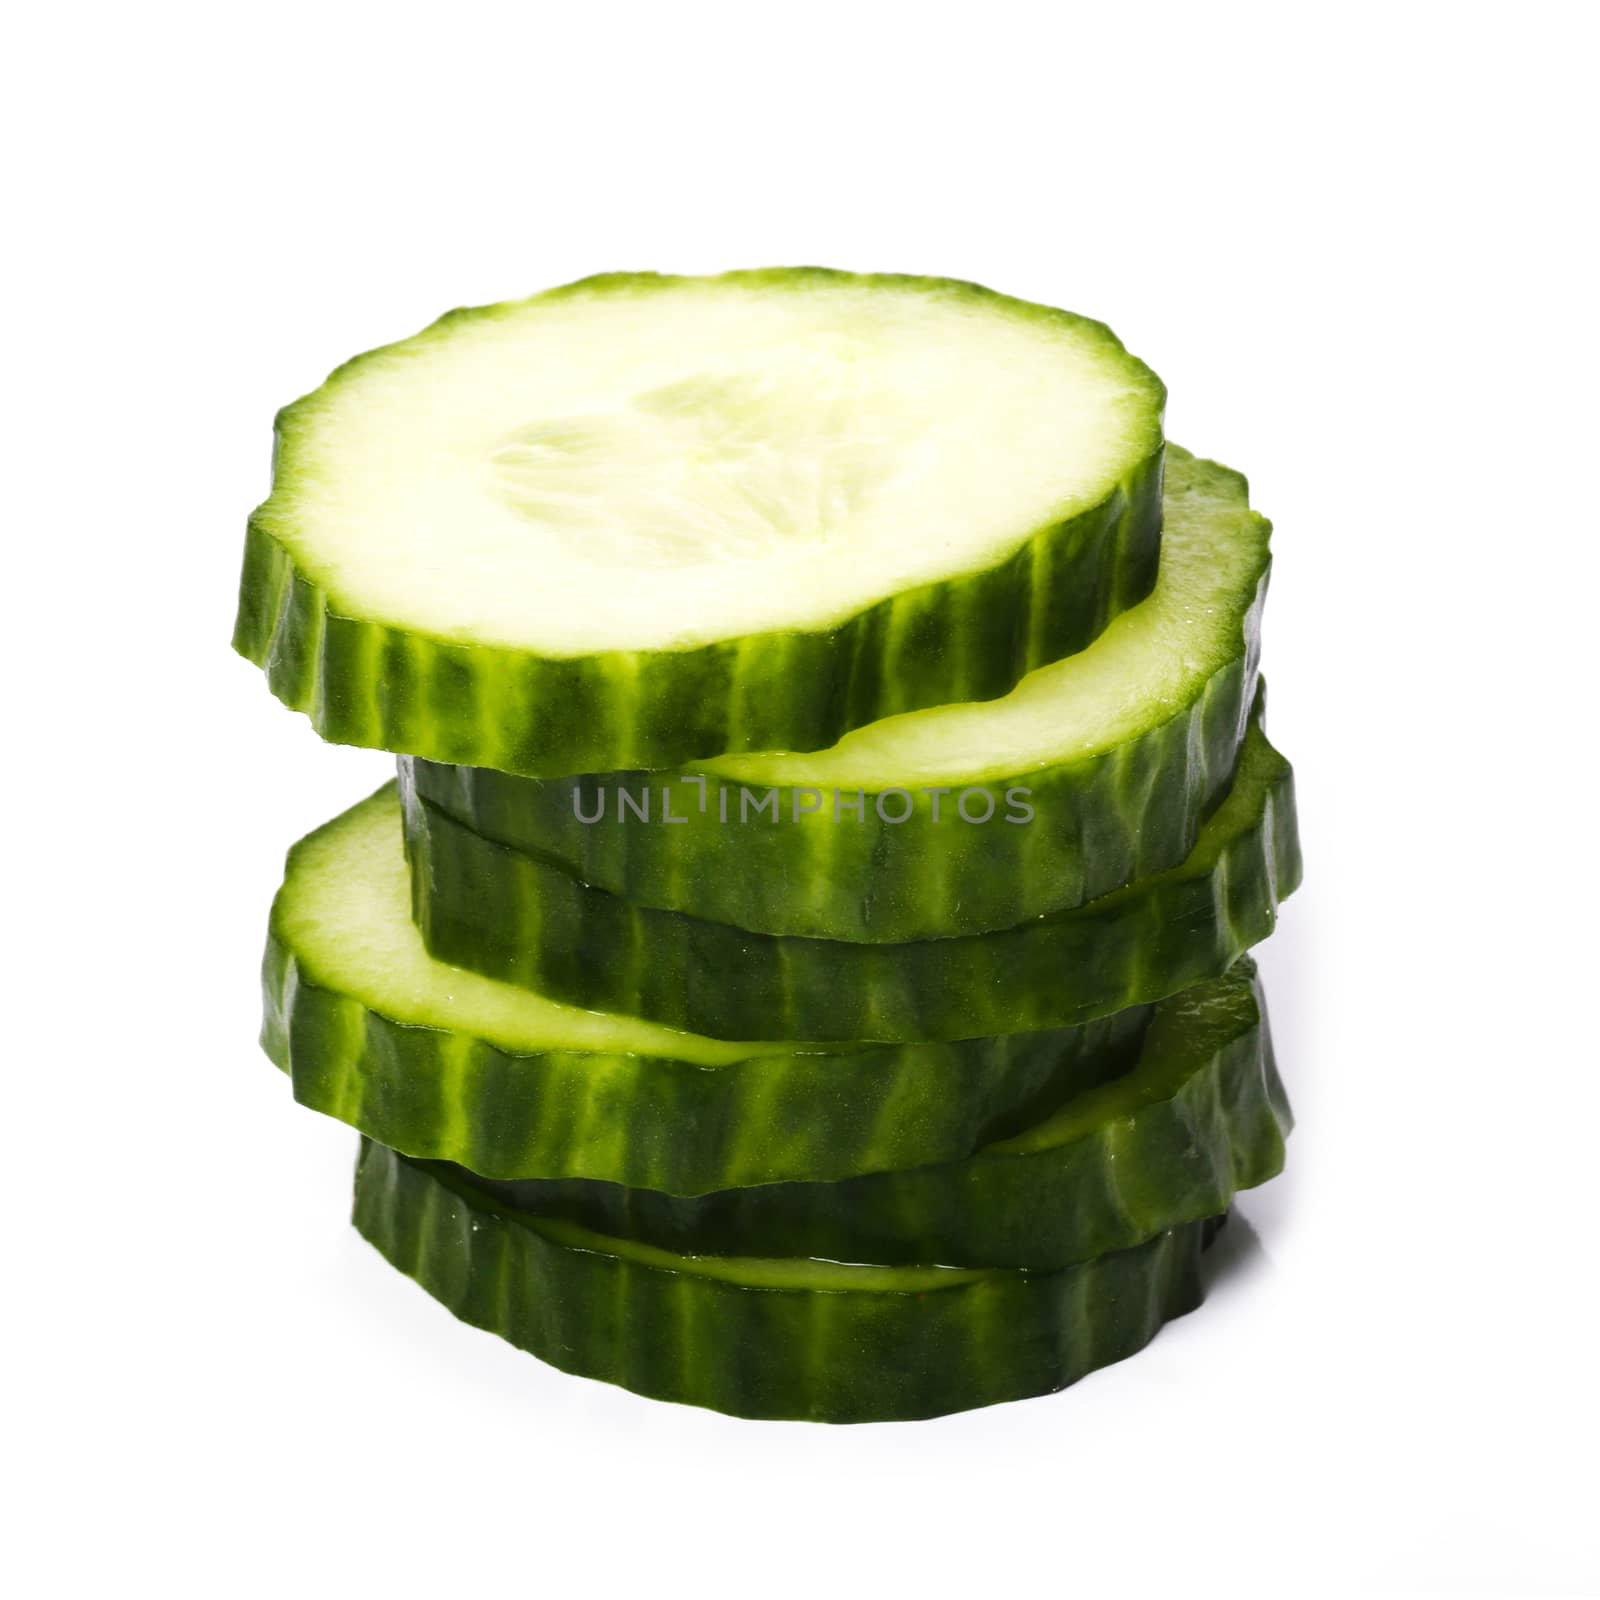 Sliced cucumber by rufatjumali